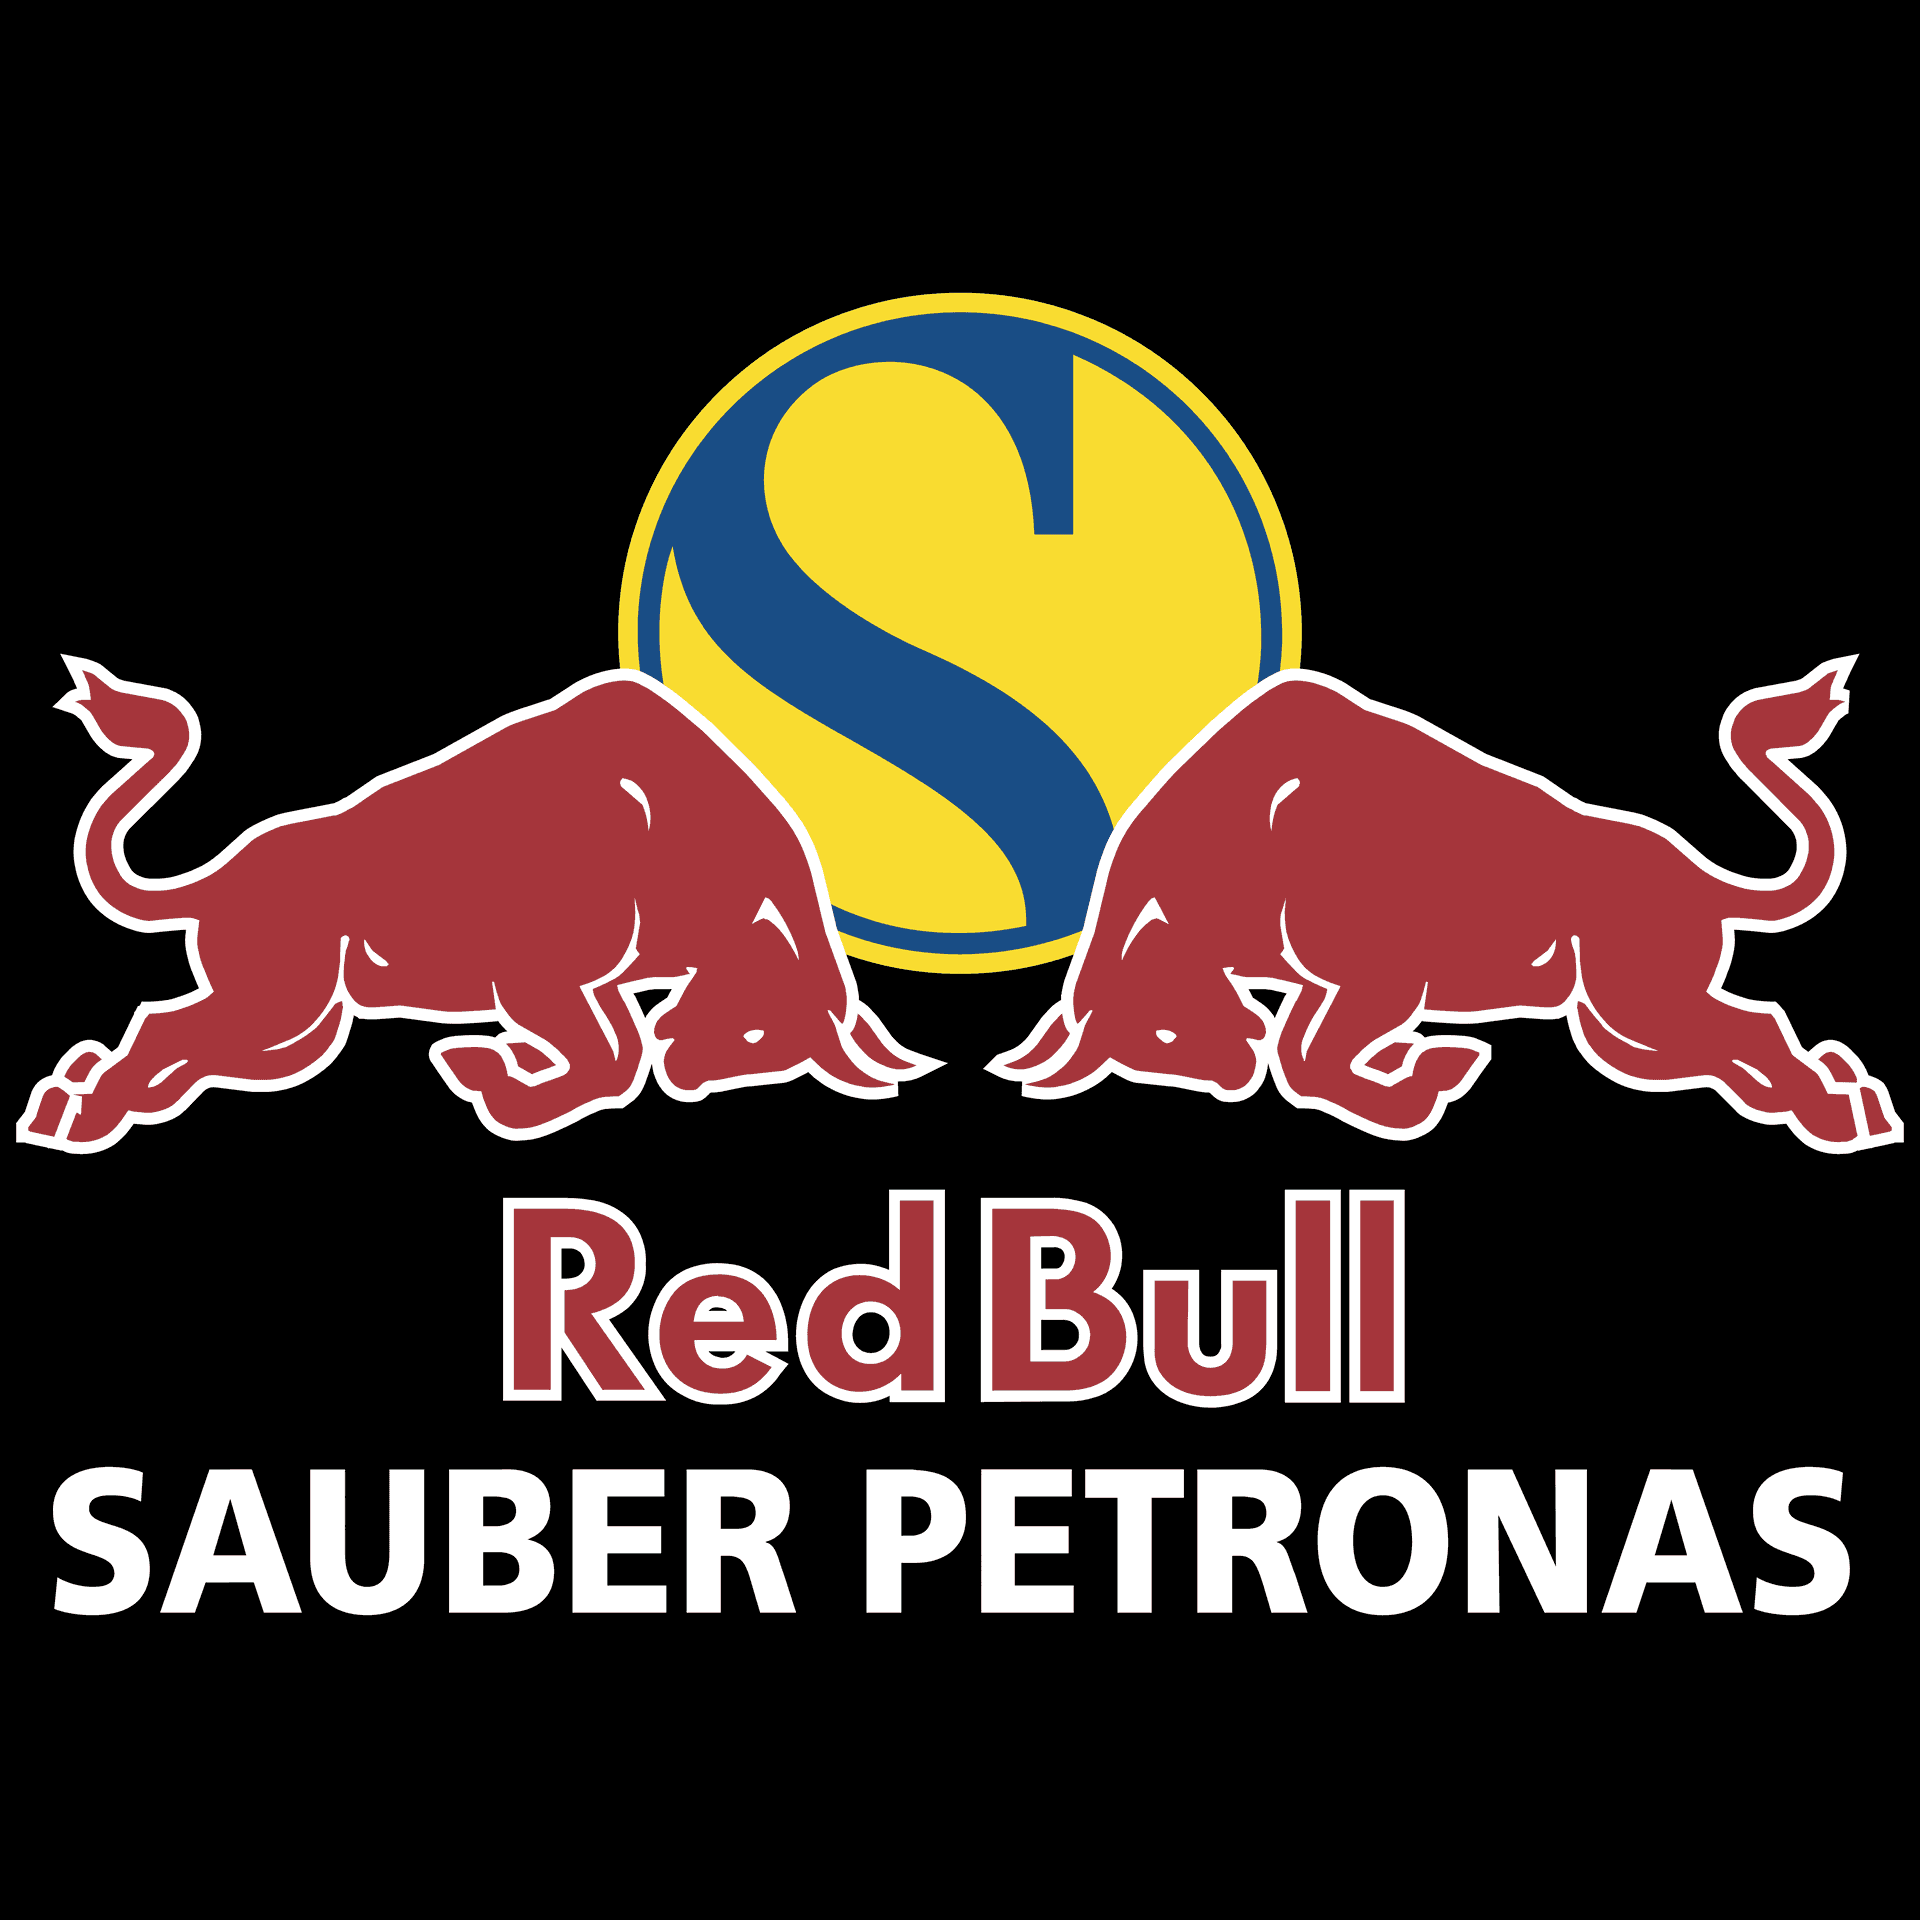 Red Bull Sauber Petanas Logo